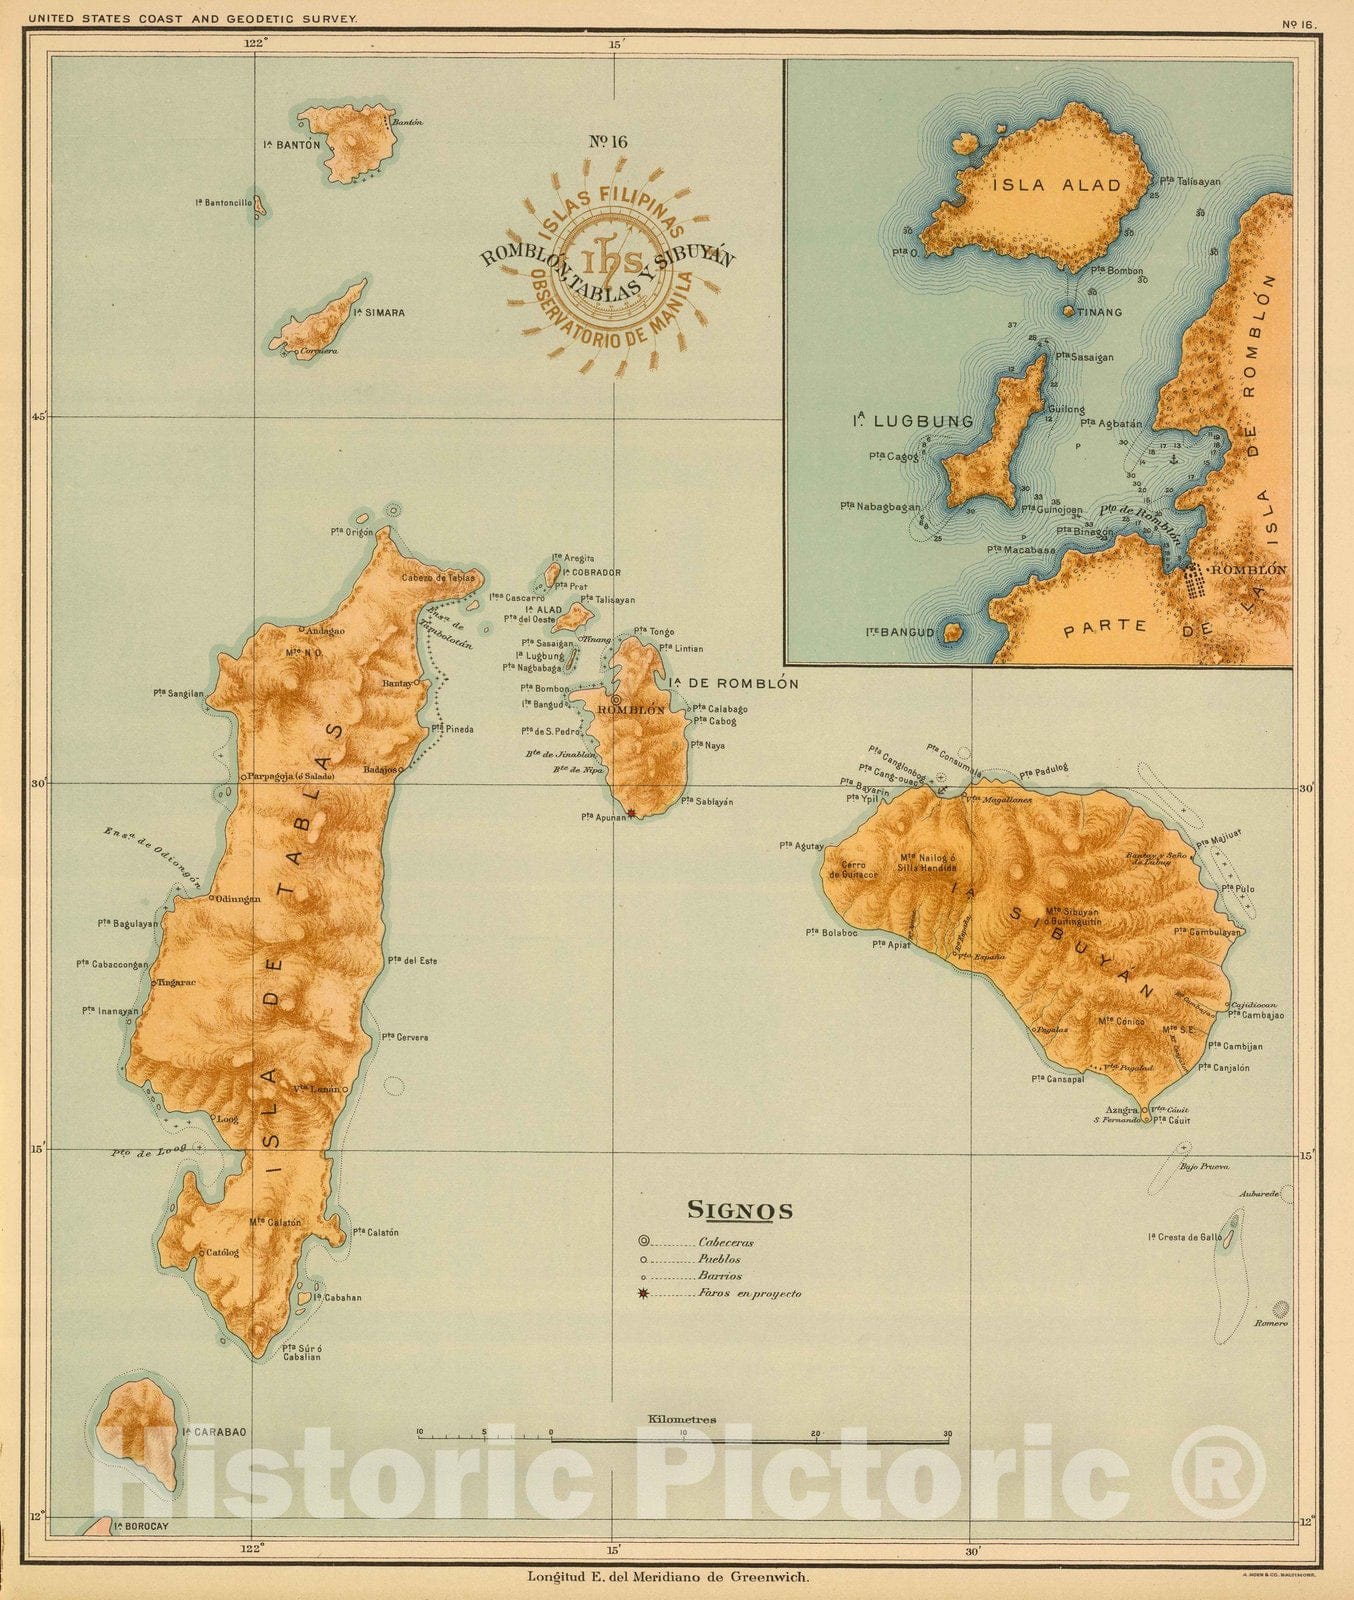 tablas island map